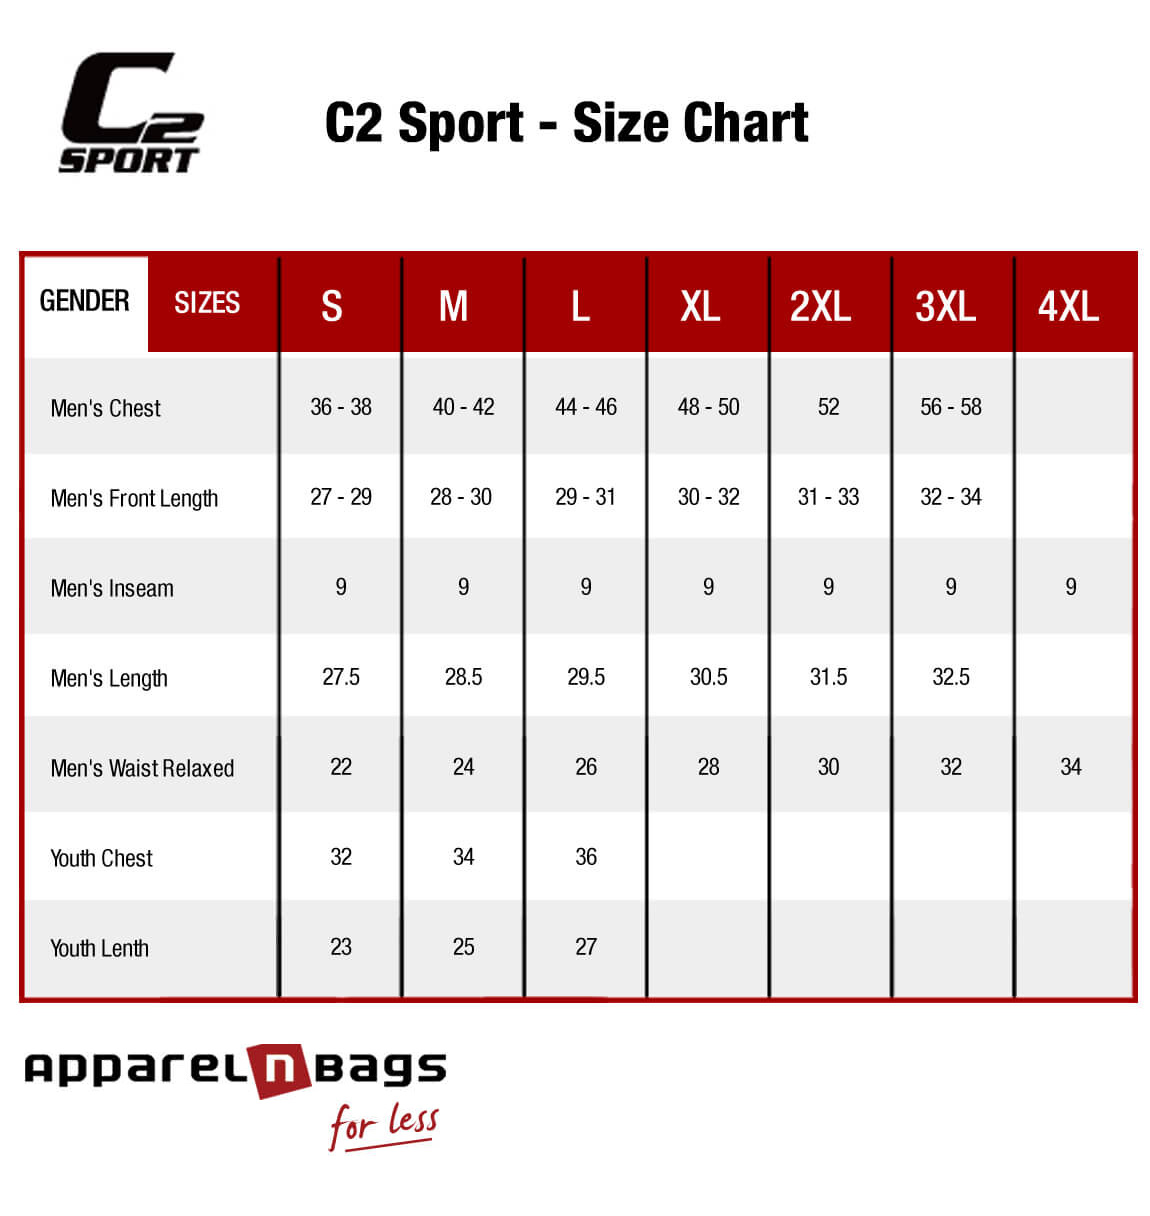 C2 Sport - Size Chart